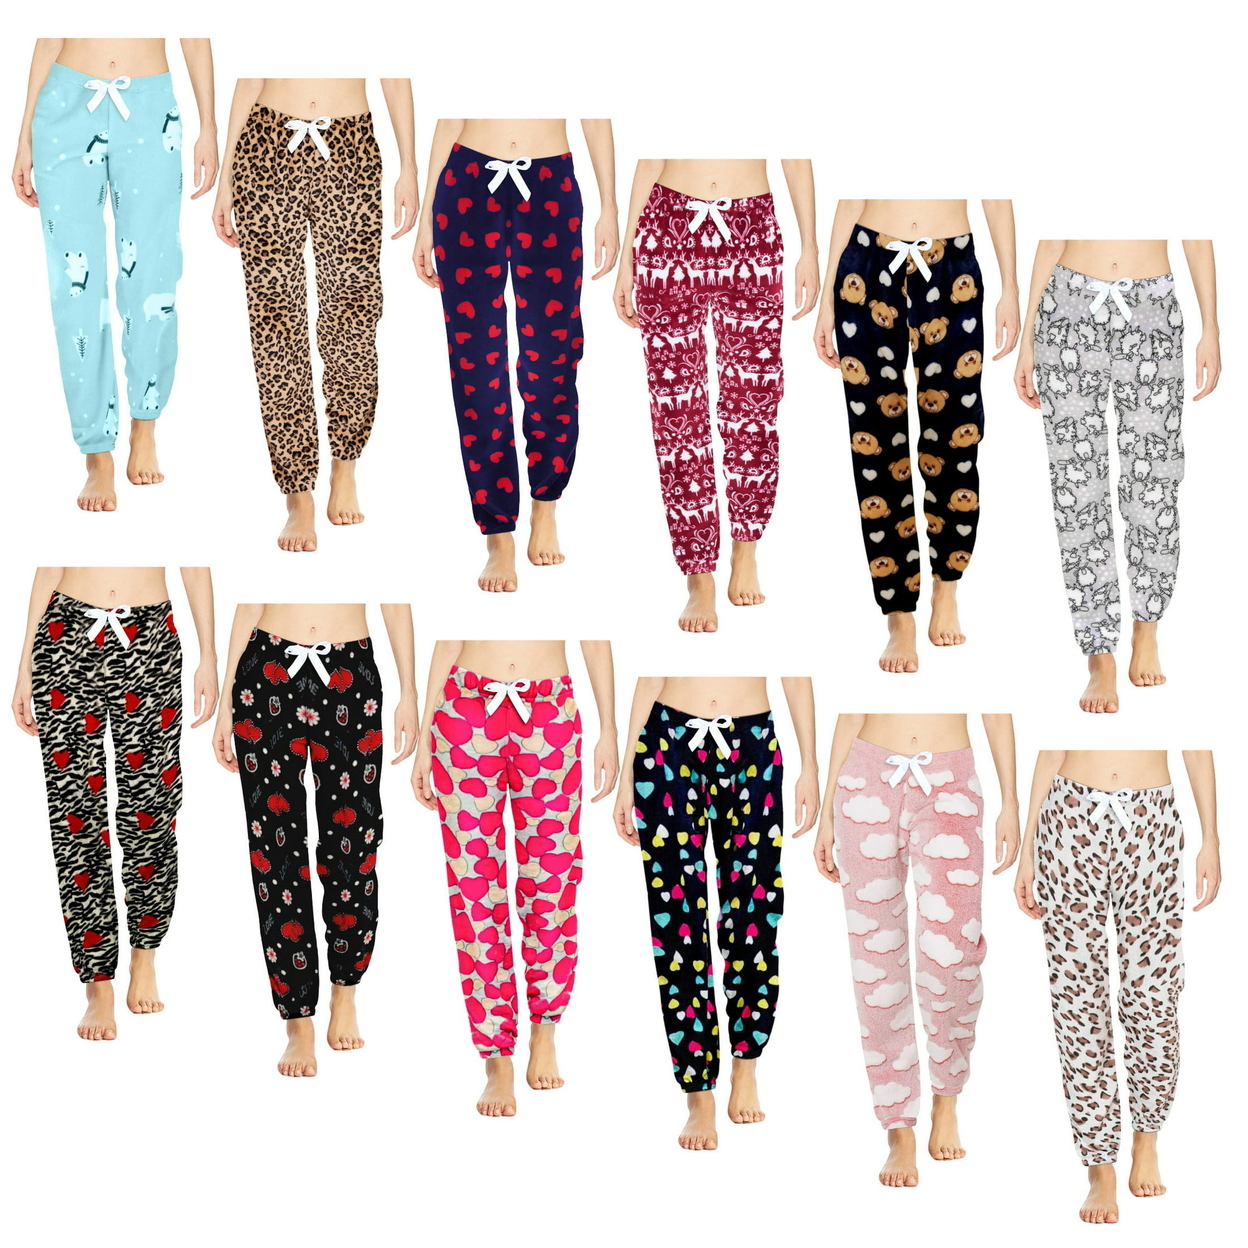 3-Pack: Women's Printed Ultra-Soft Comfy Stretch Micro-Fleece Pajama Lounge Pants - Medium, Shapes